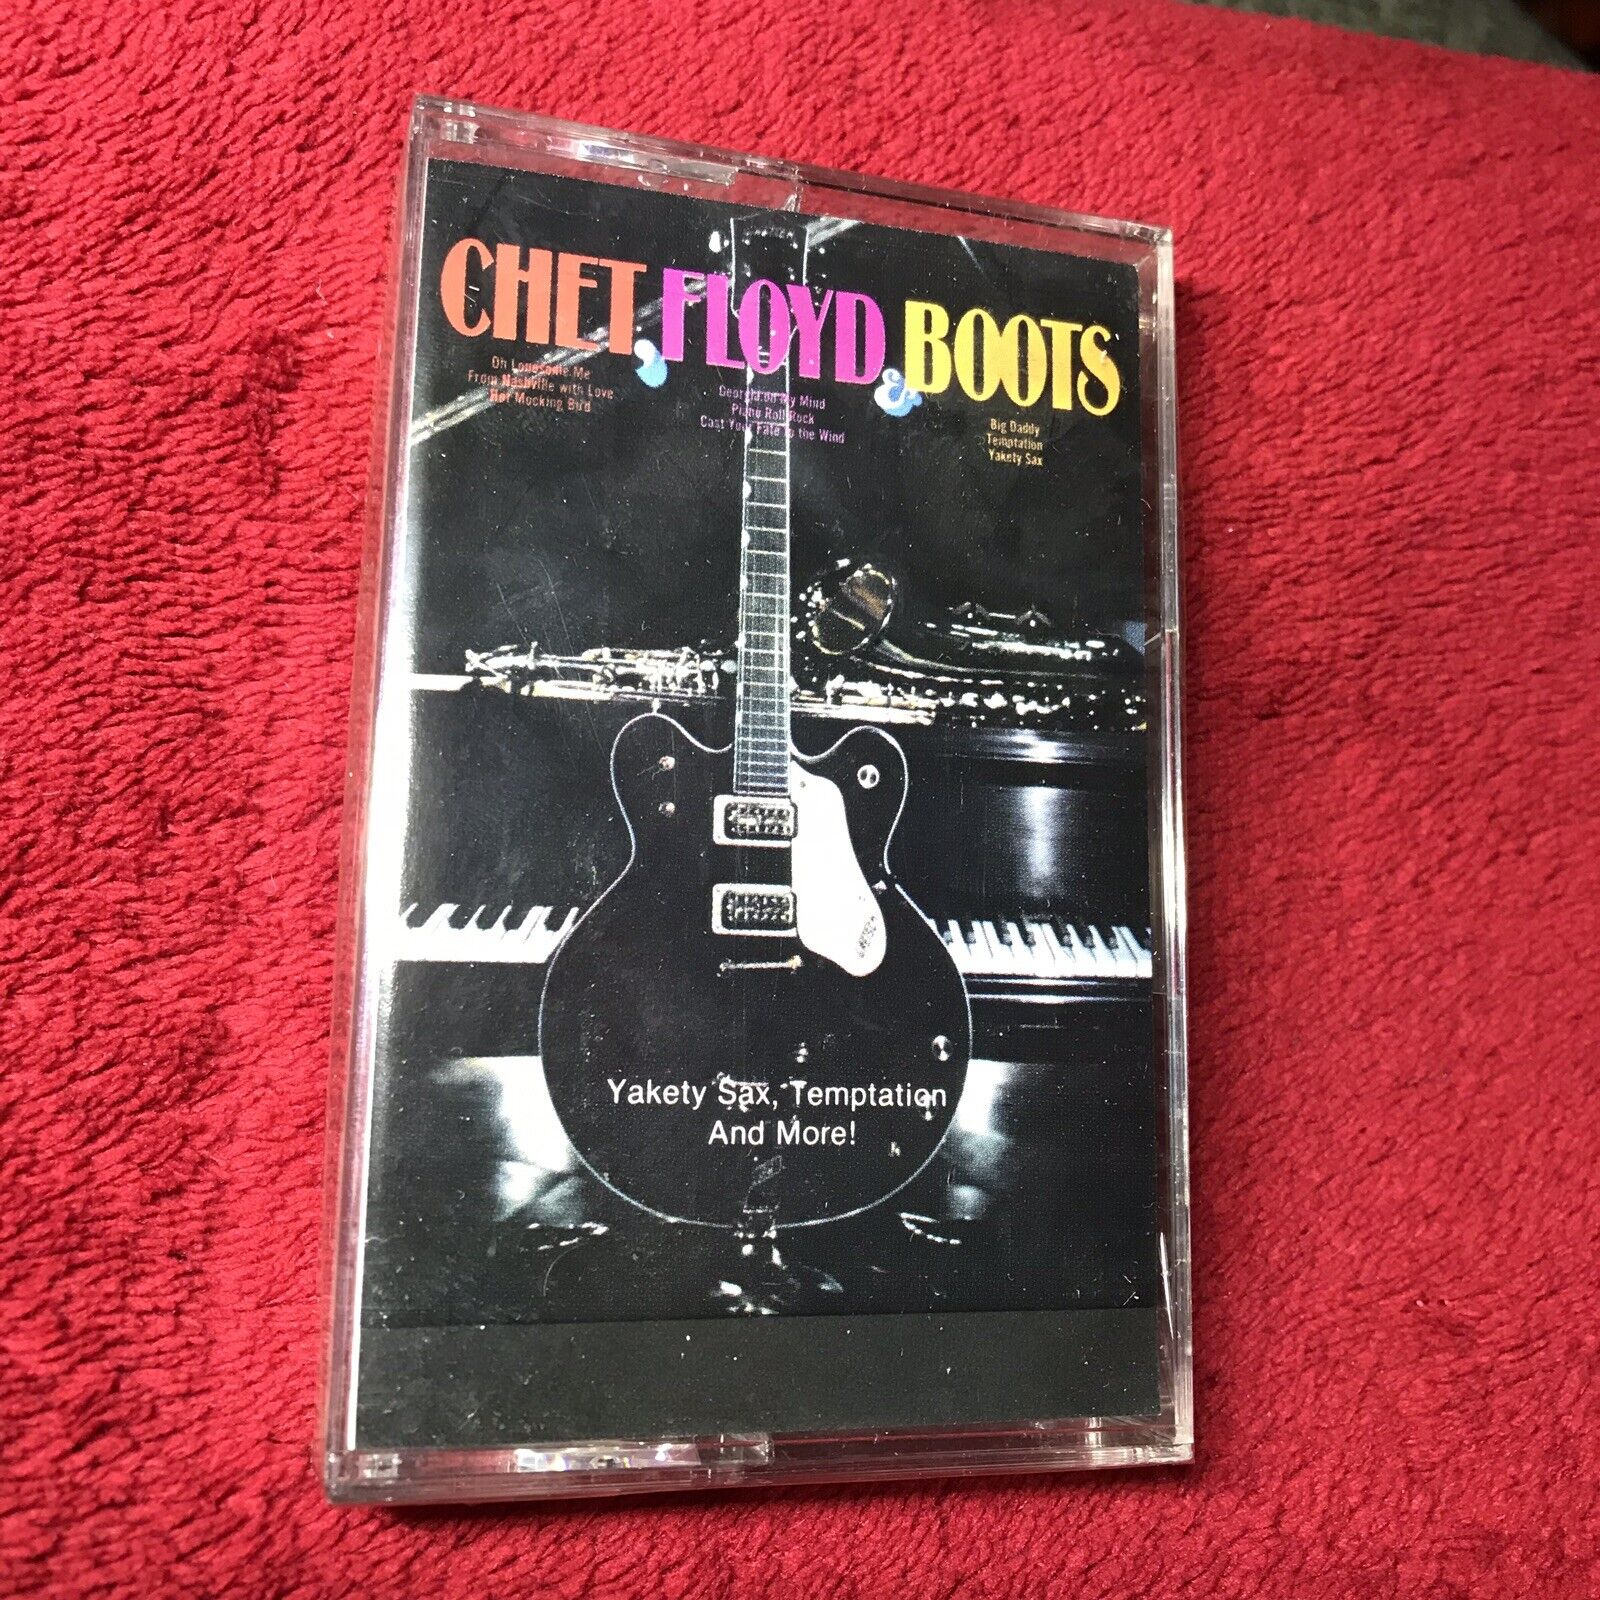 Vintage cassette tape Chet Floyd Boots, Great Gift